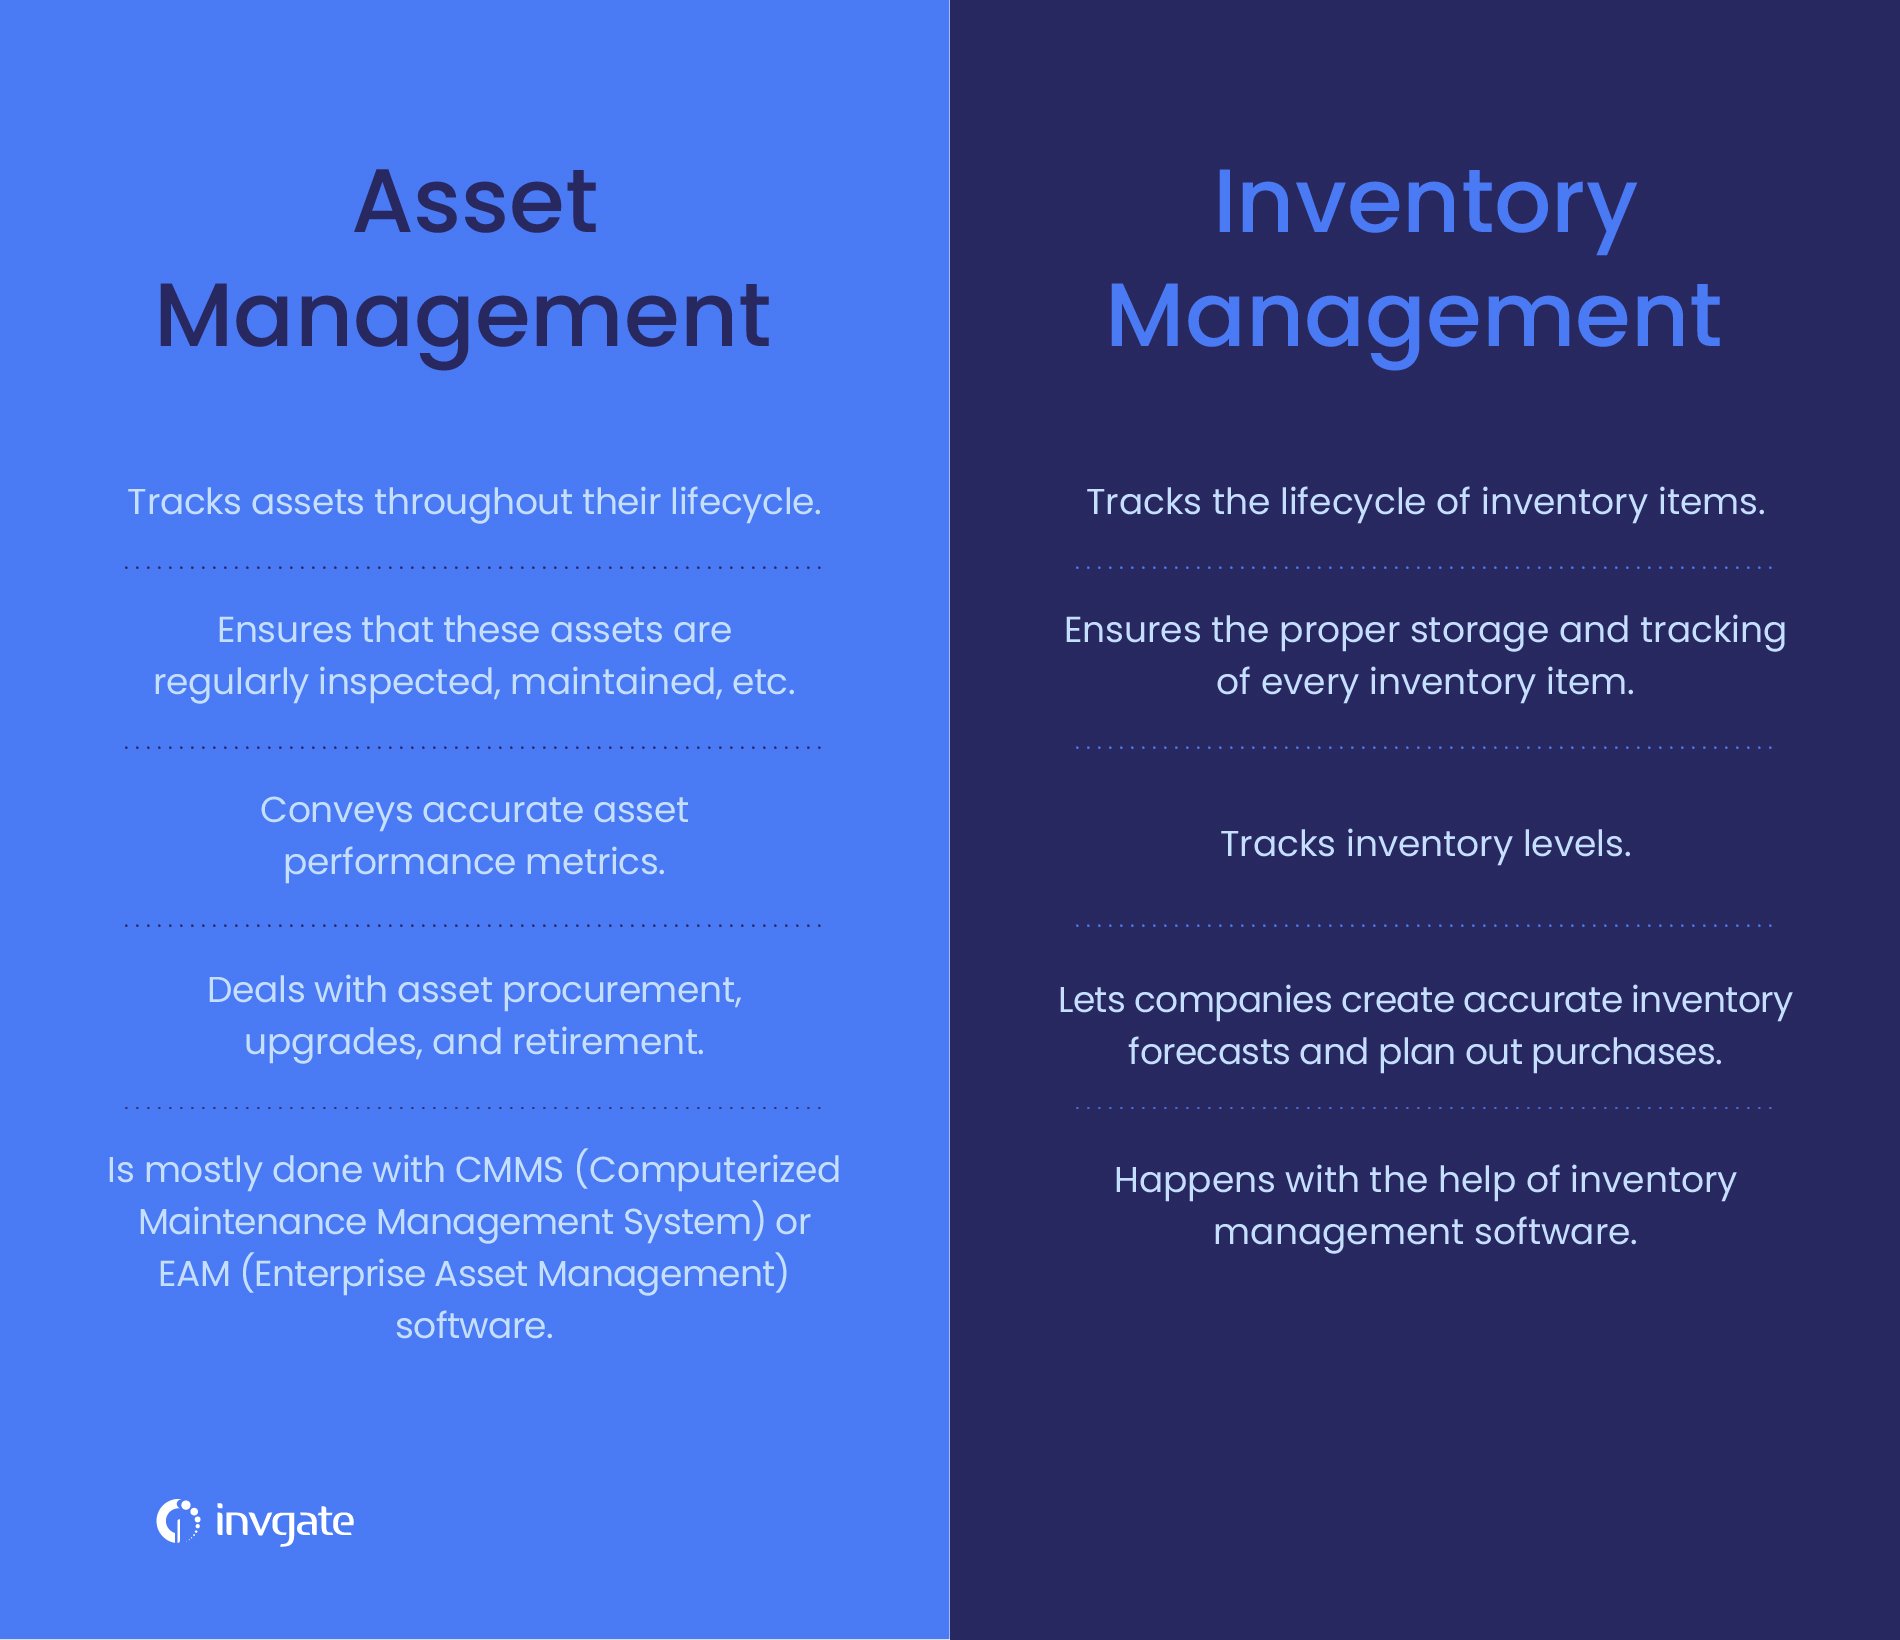 Inventory management vs asset management